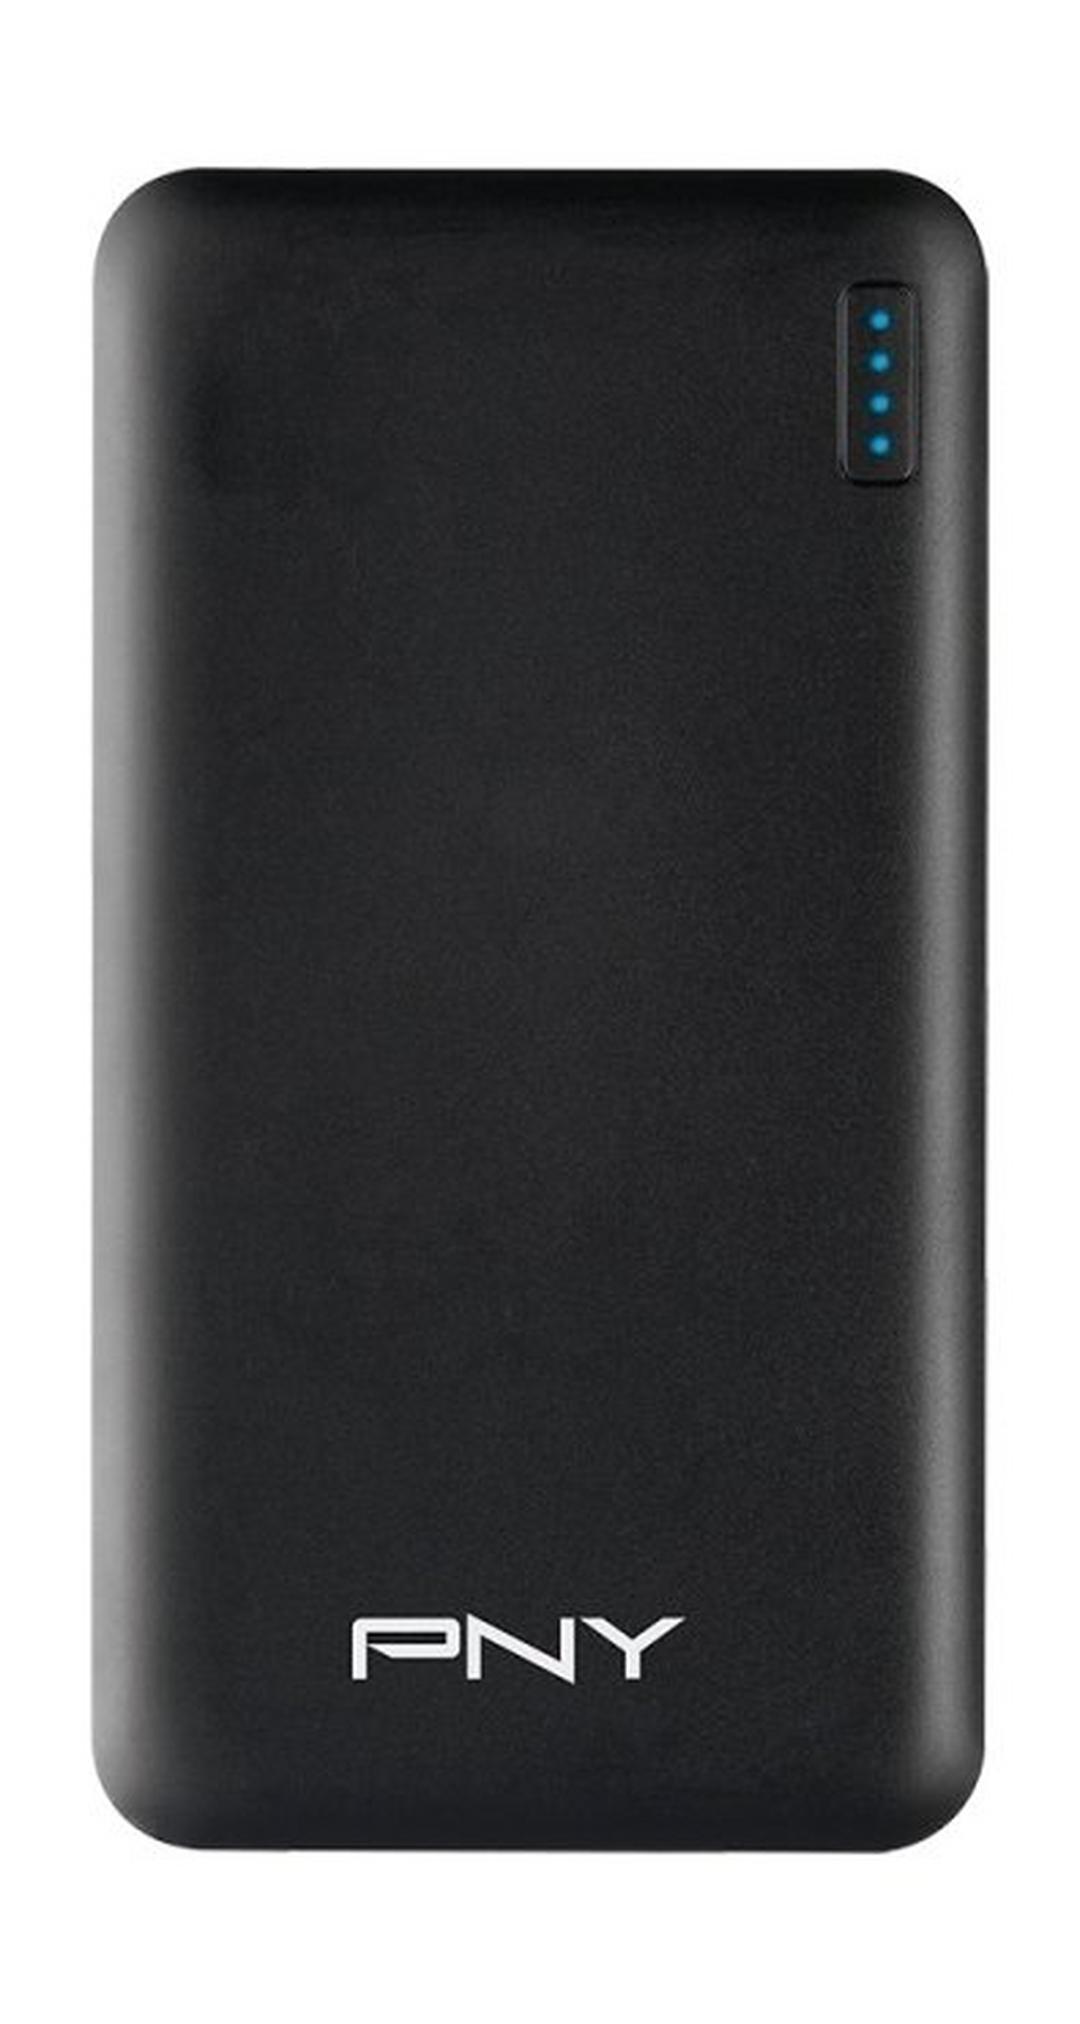 PNY PowerPack Slim 5,000mAh Portable Powerbank - Black